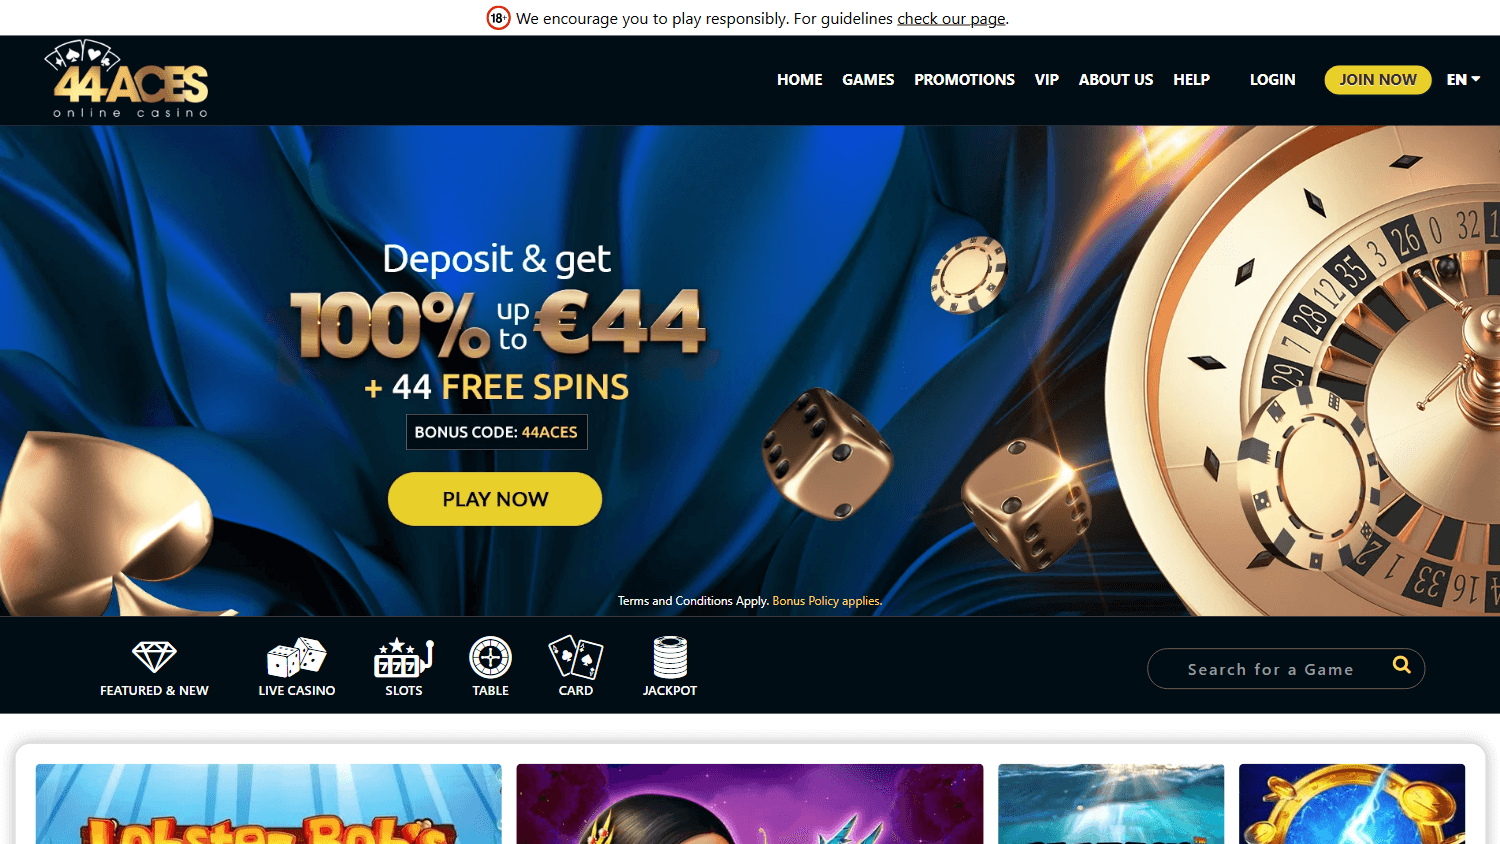 44aces_casino_homepage_desktop